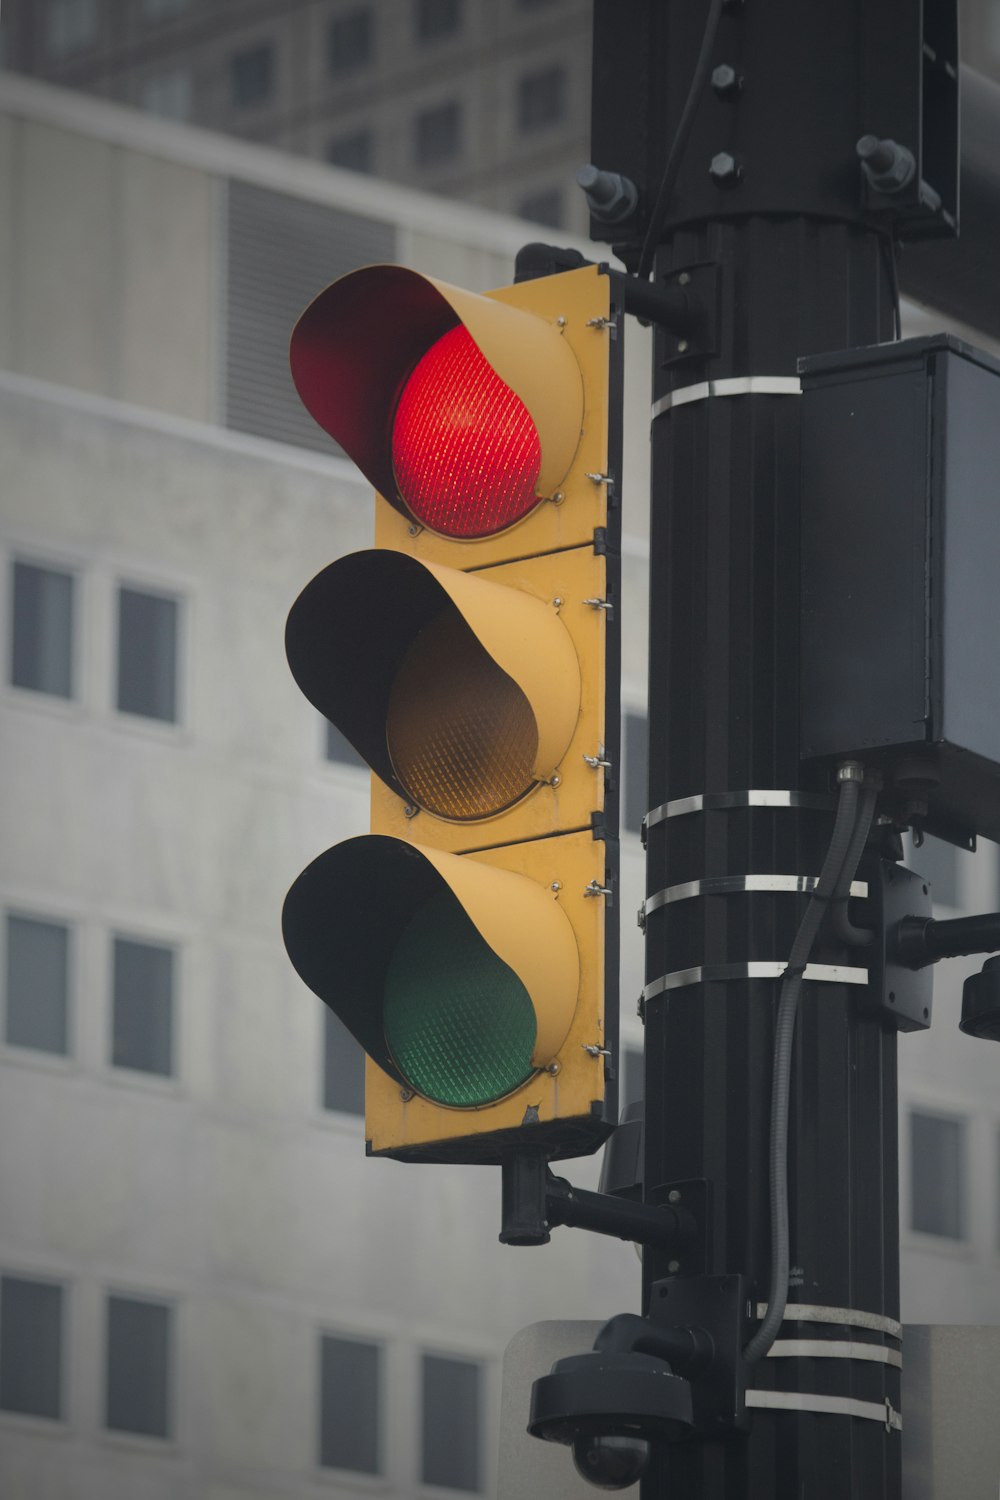 traffic light at red